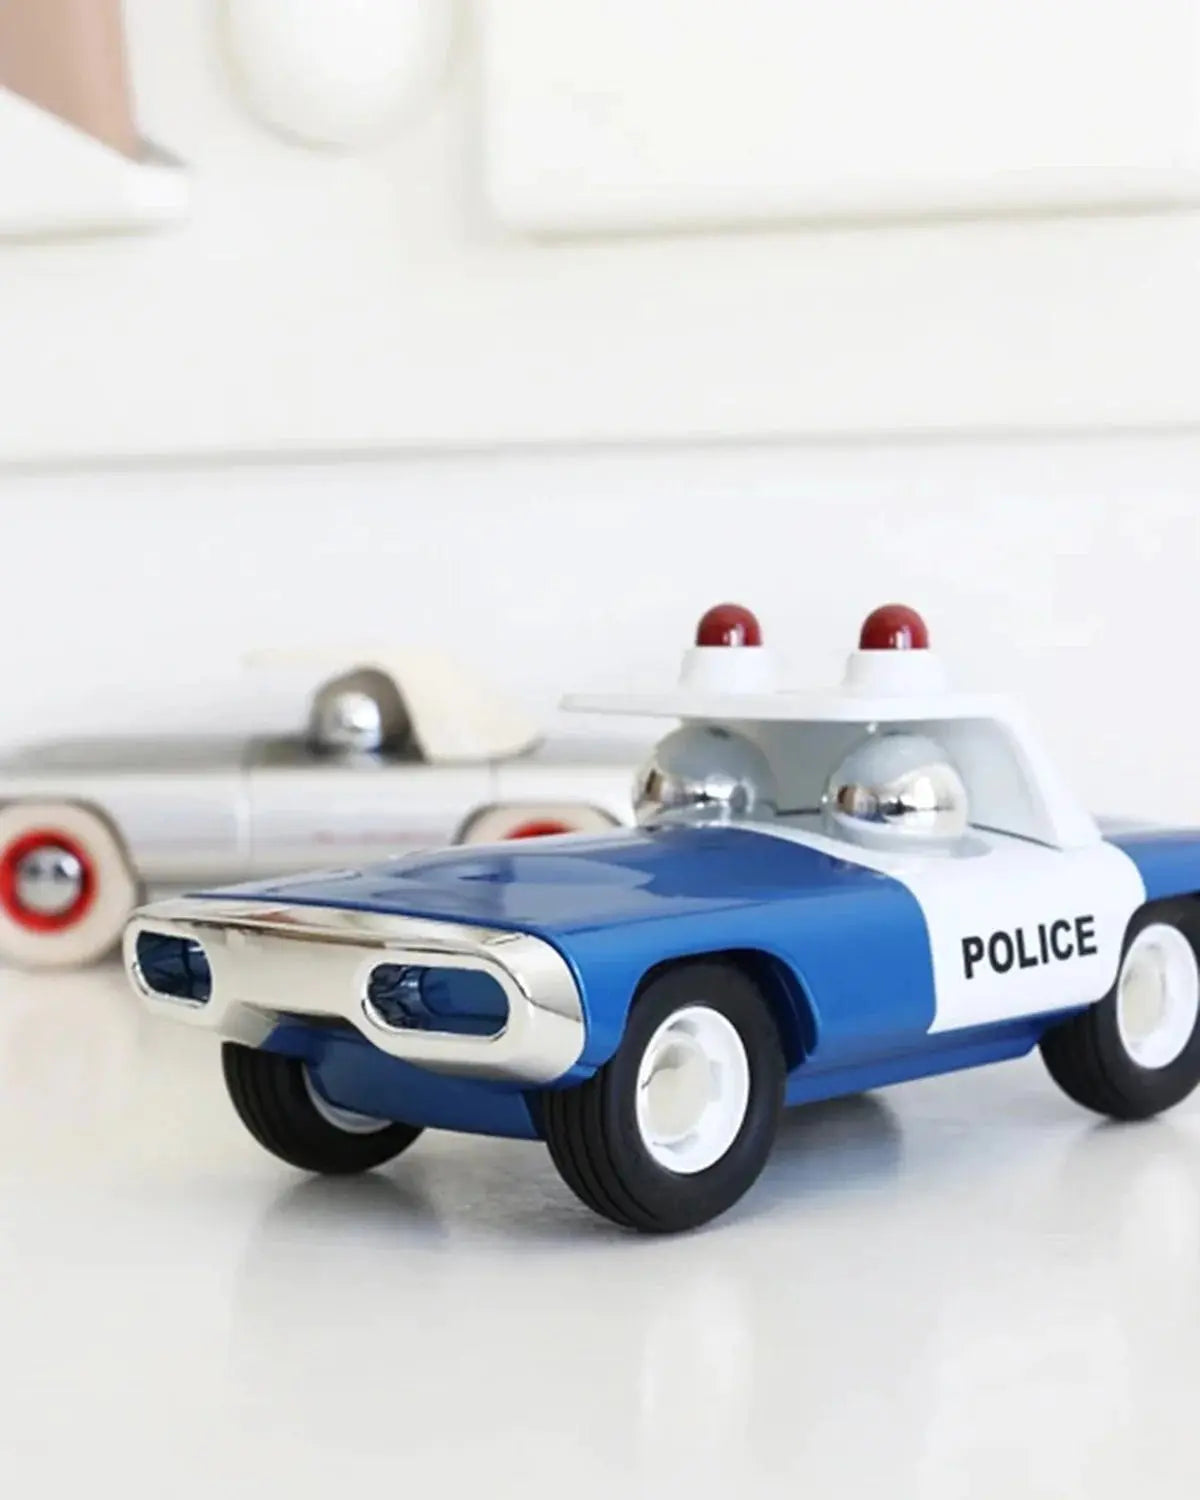 Playforever Car Maverick Heat, 1960s New York Inspired Toy, Collectible Vehicle, Retro Playtime Fun  Playforever   